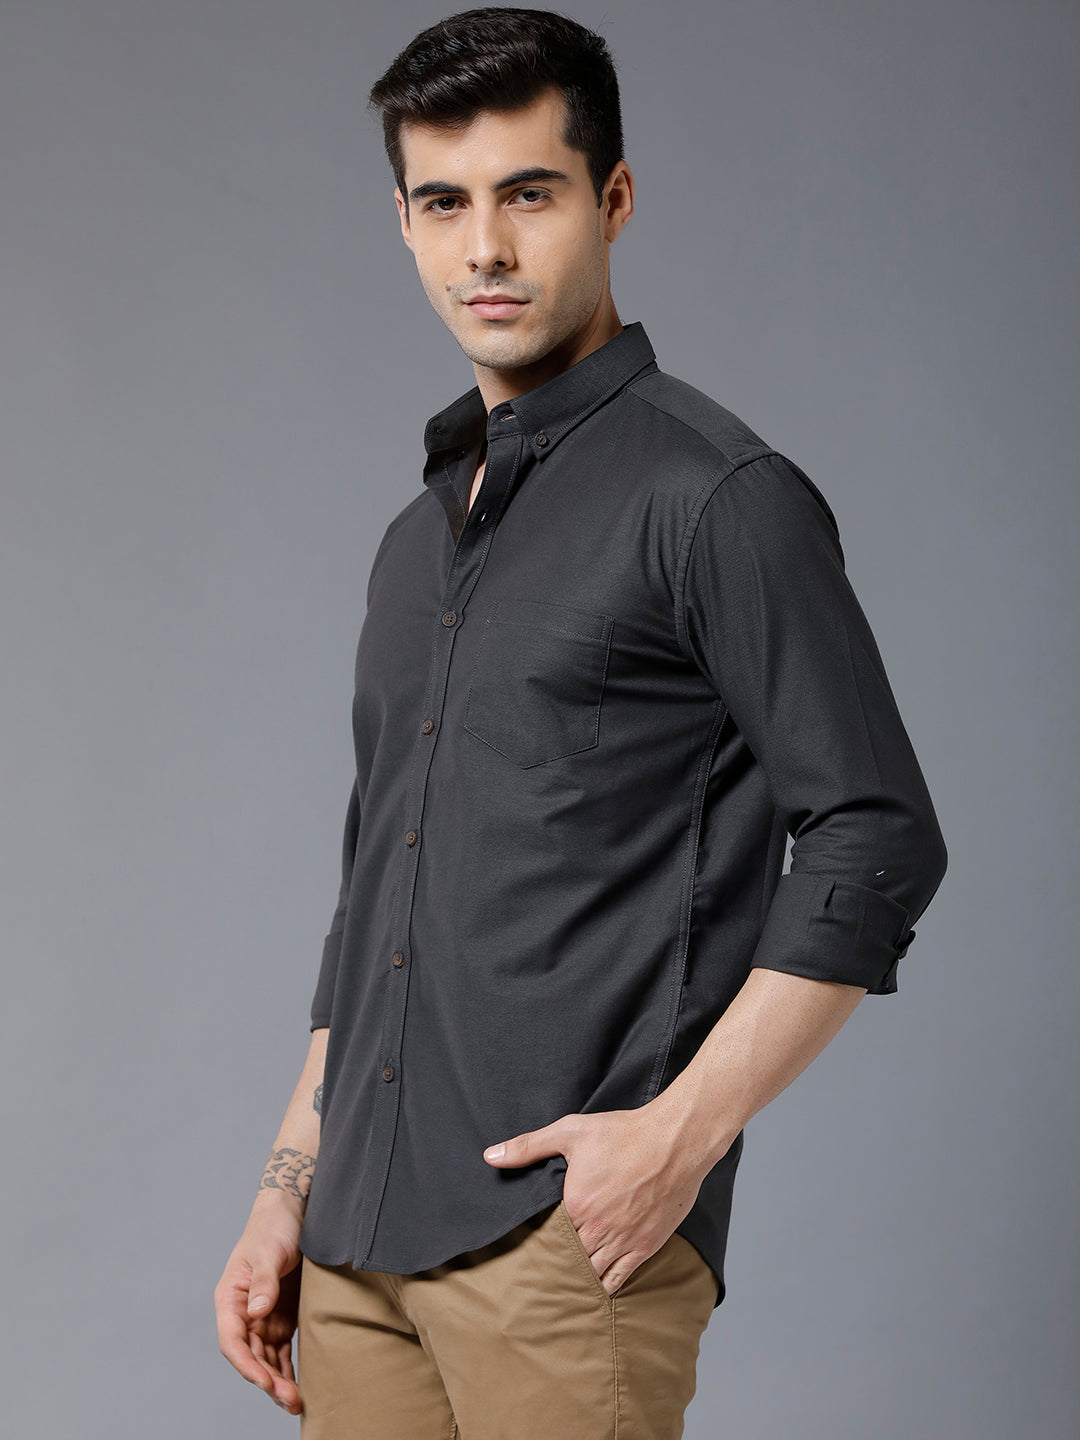 dark grey colour shirt